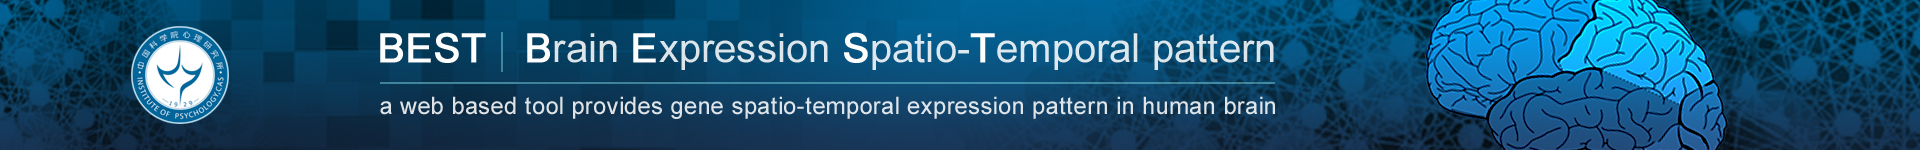 Brain Expression Spatio-Temporal pattern logo image